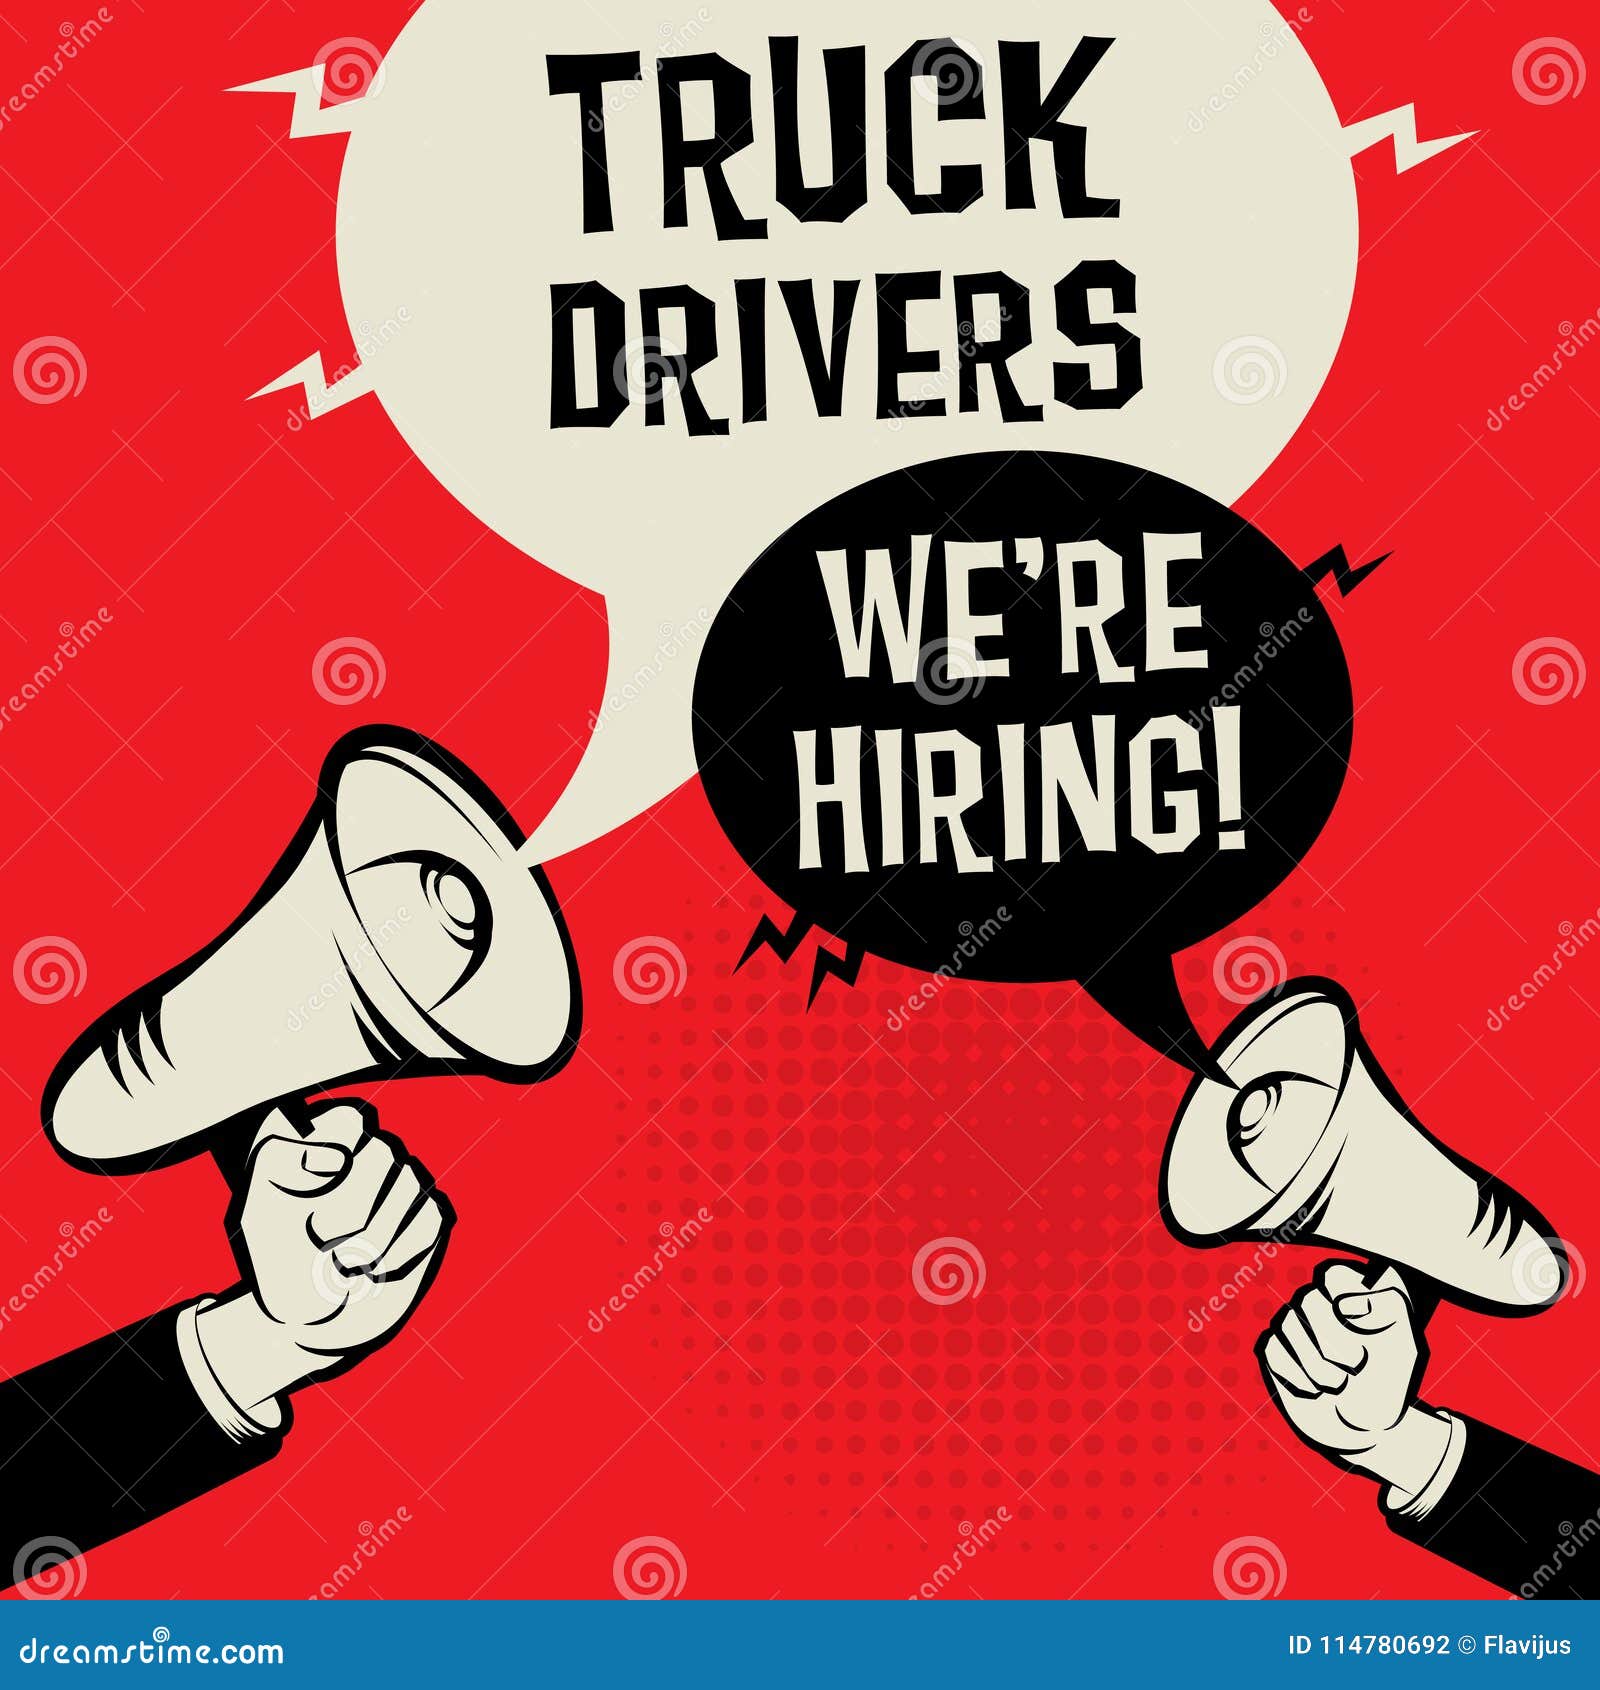 truck drivers - were hiring